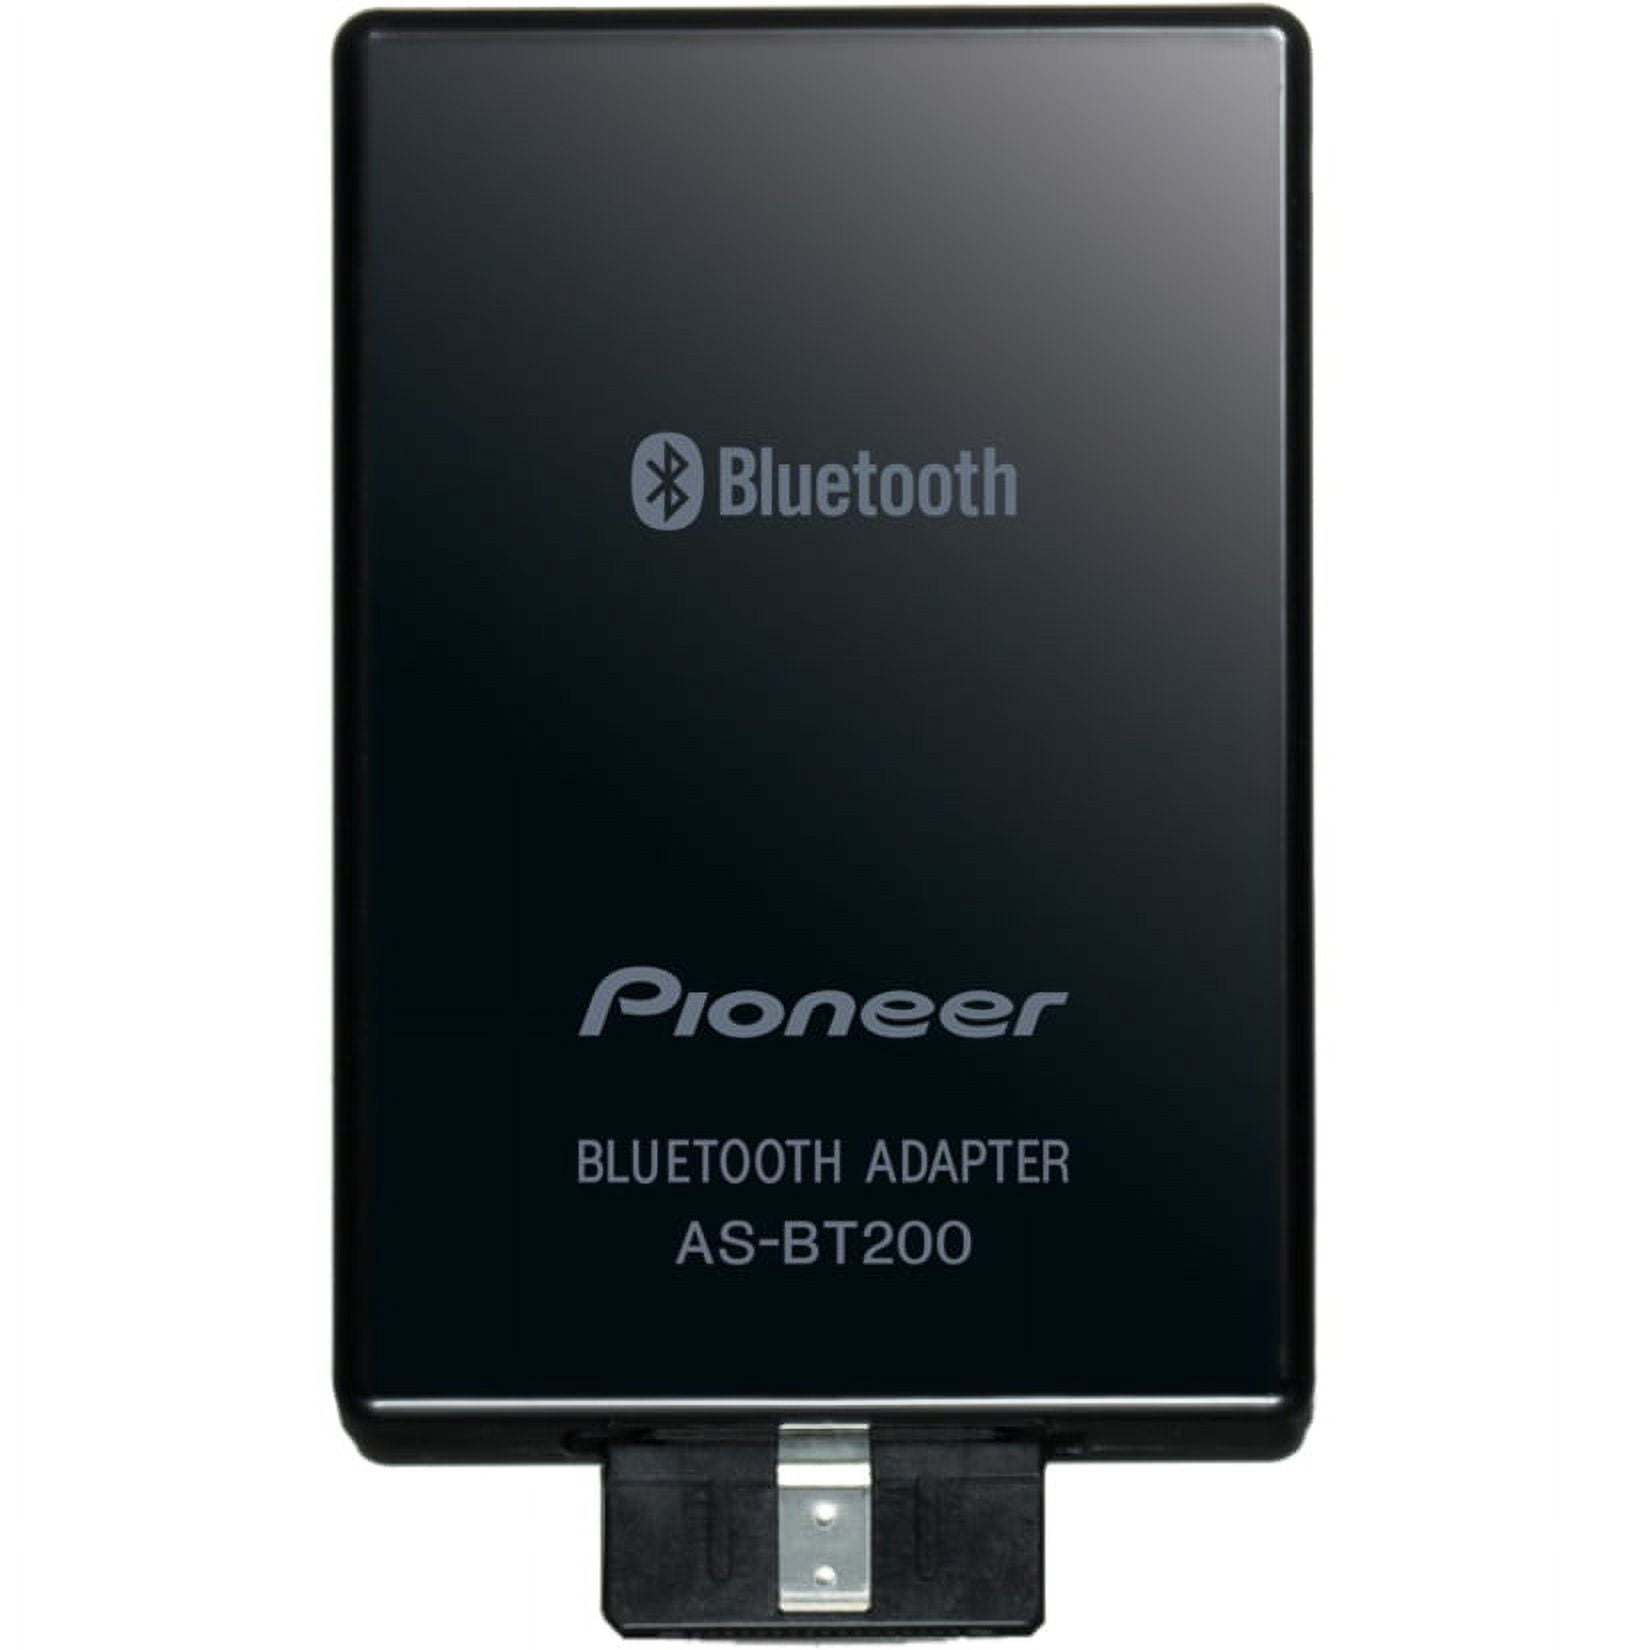 Pioneer AS-BT200 Bluetooth 2.0 Bluetooth Adapter - Walmart.com